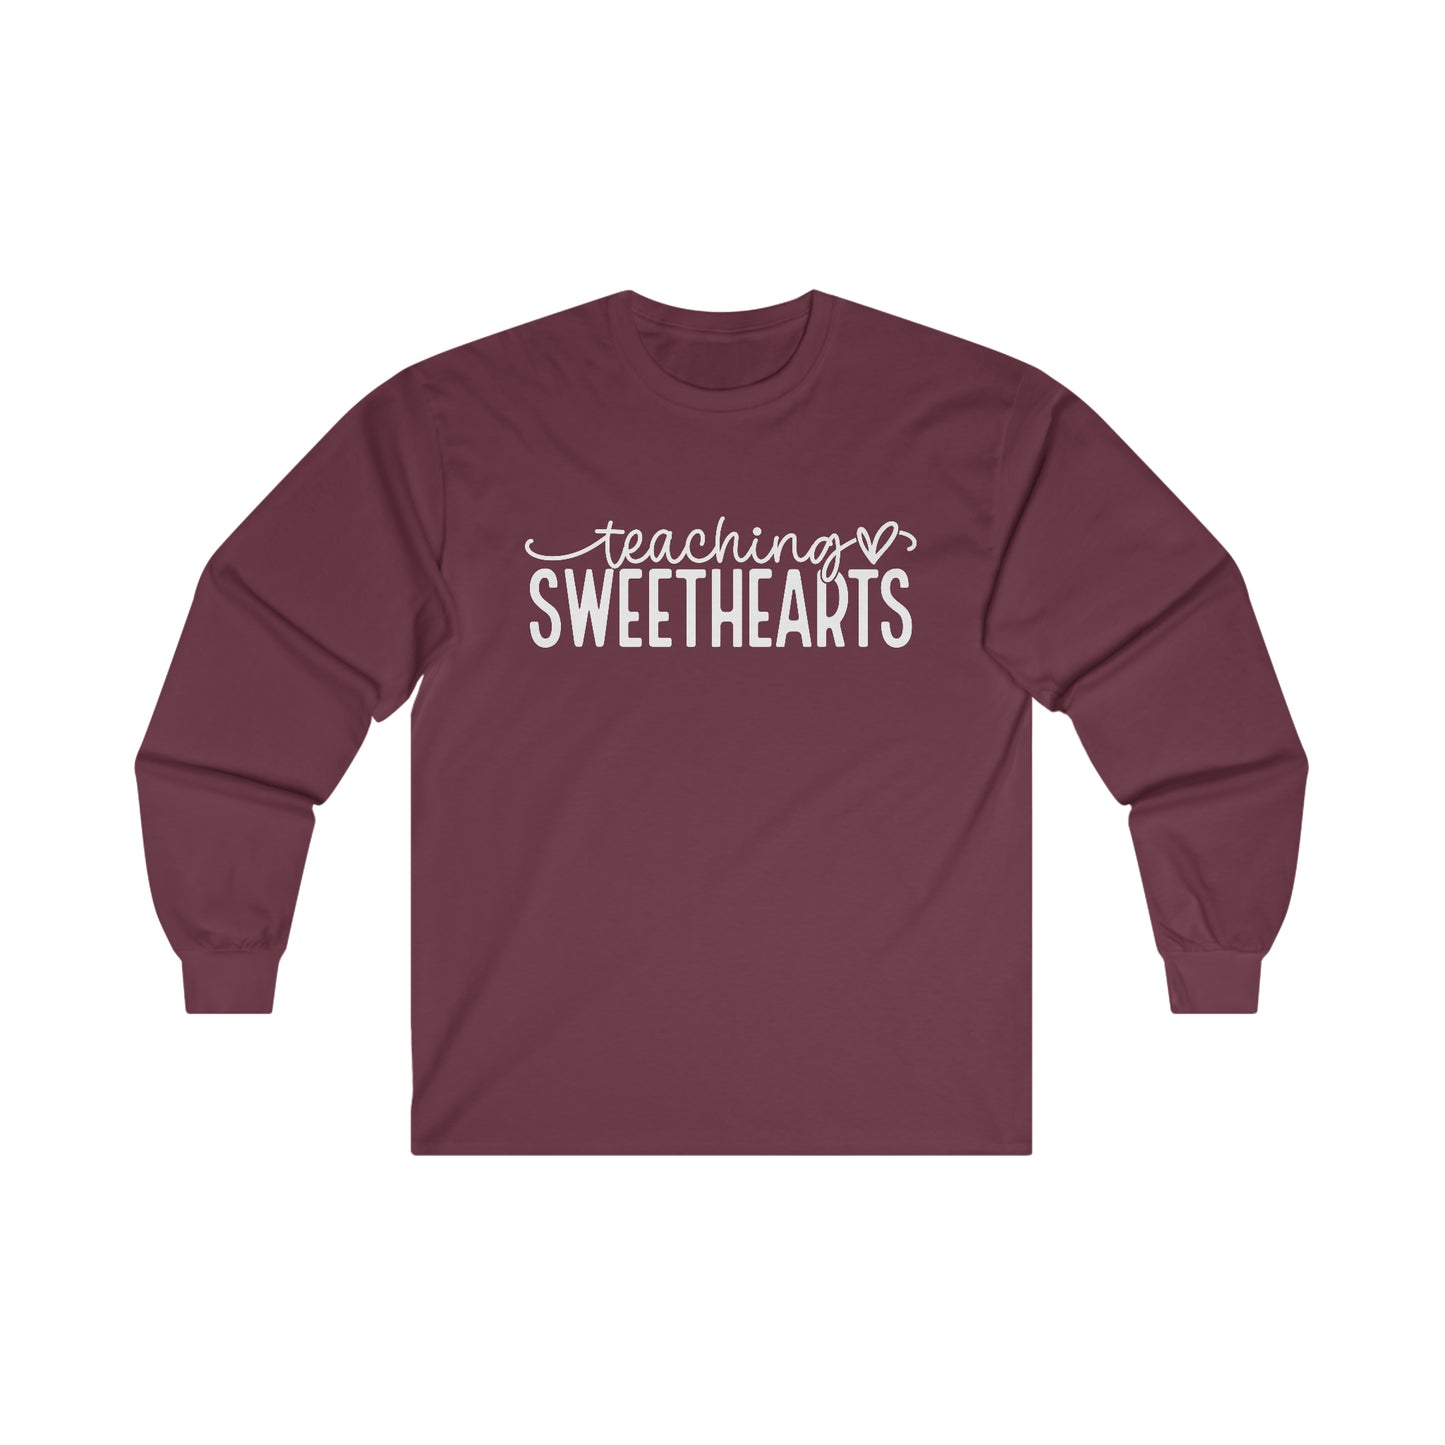 Sweethearts Long Sleeve Shirt